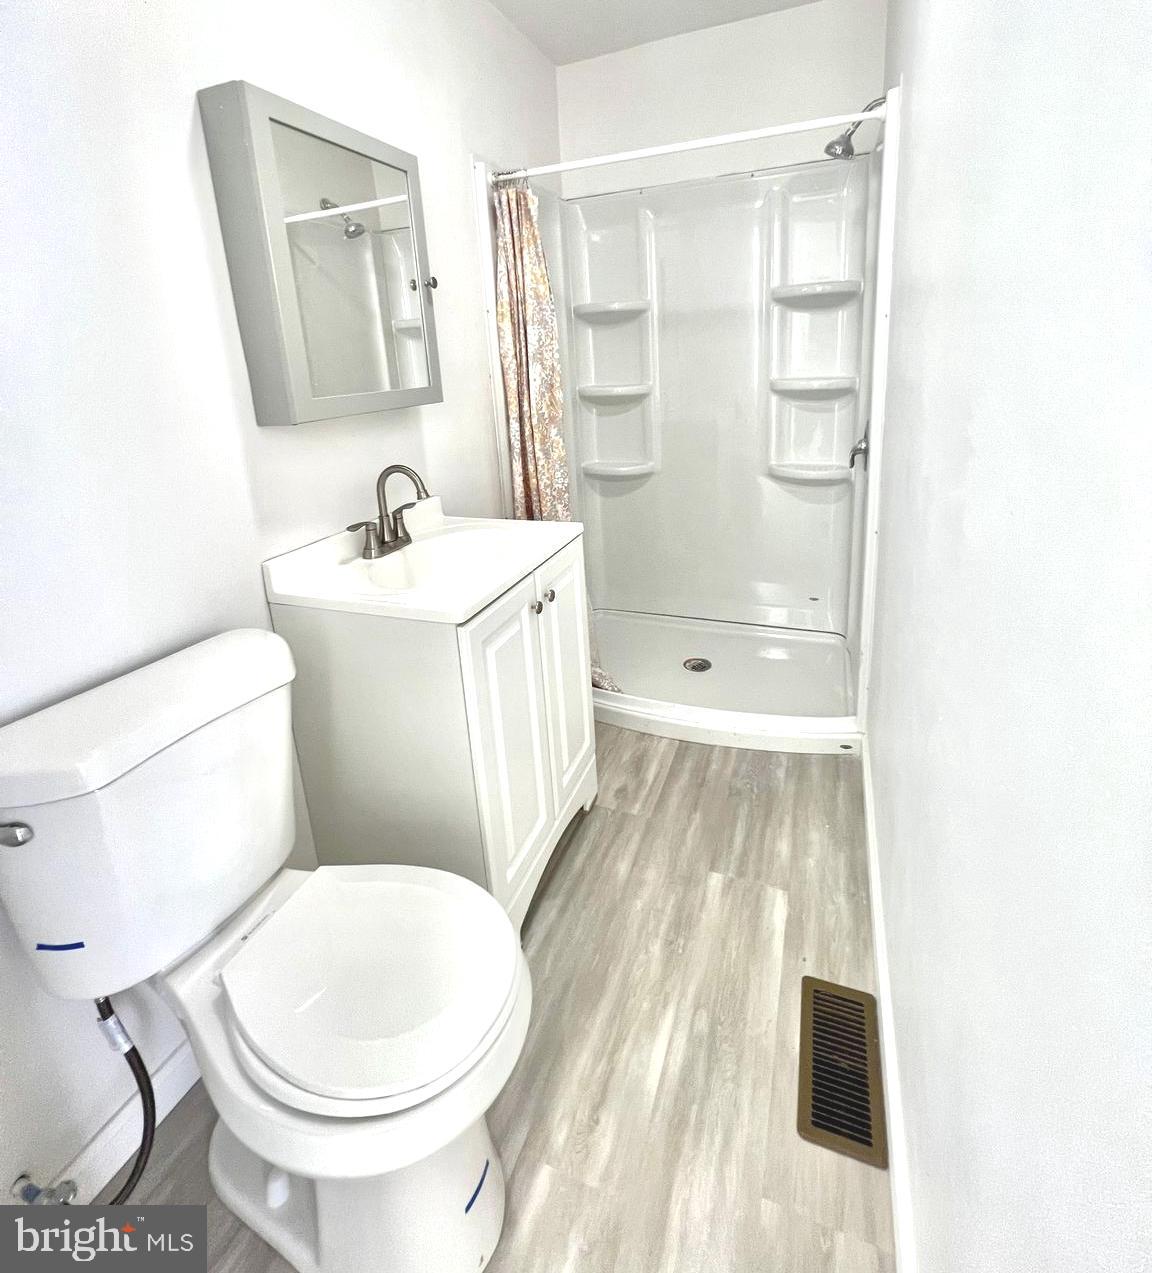 a white toilet sitting next to a bathroom sink